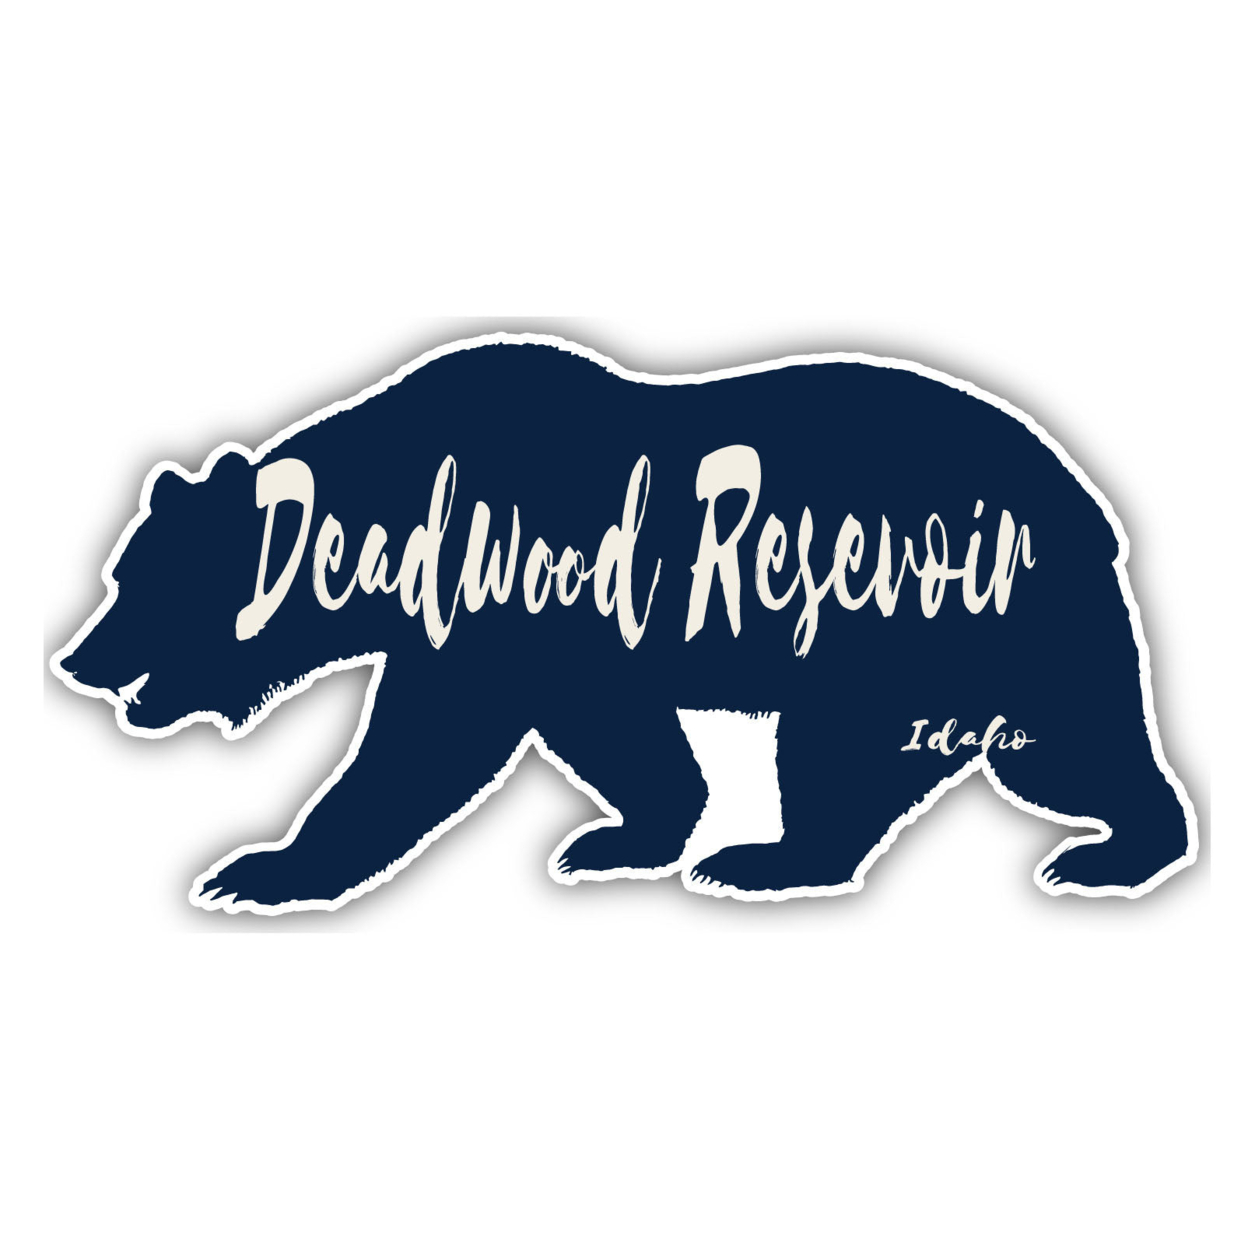 Deadwood Resevoir Idaho Souvenir Decorative Stickers (Choose Theme And Size) - Single Unit, 8-Inch, Bear